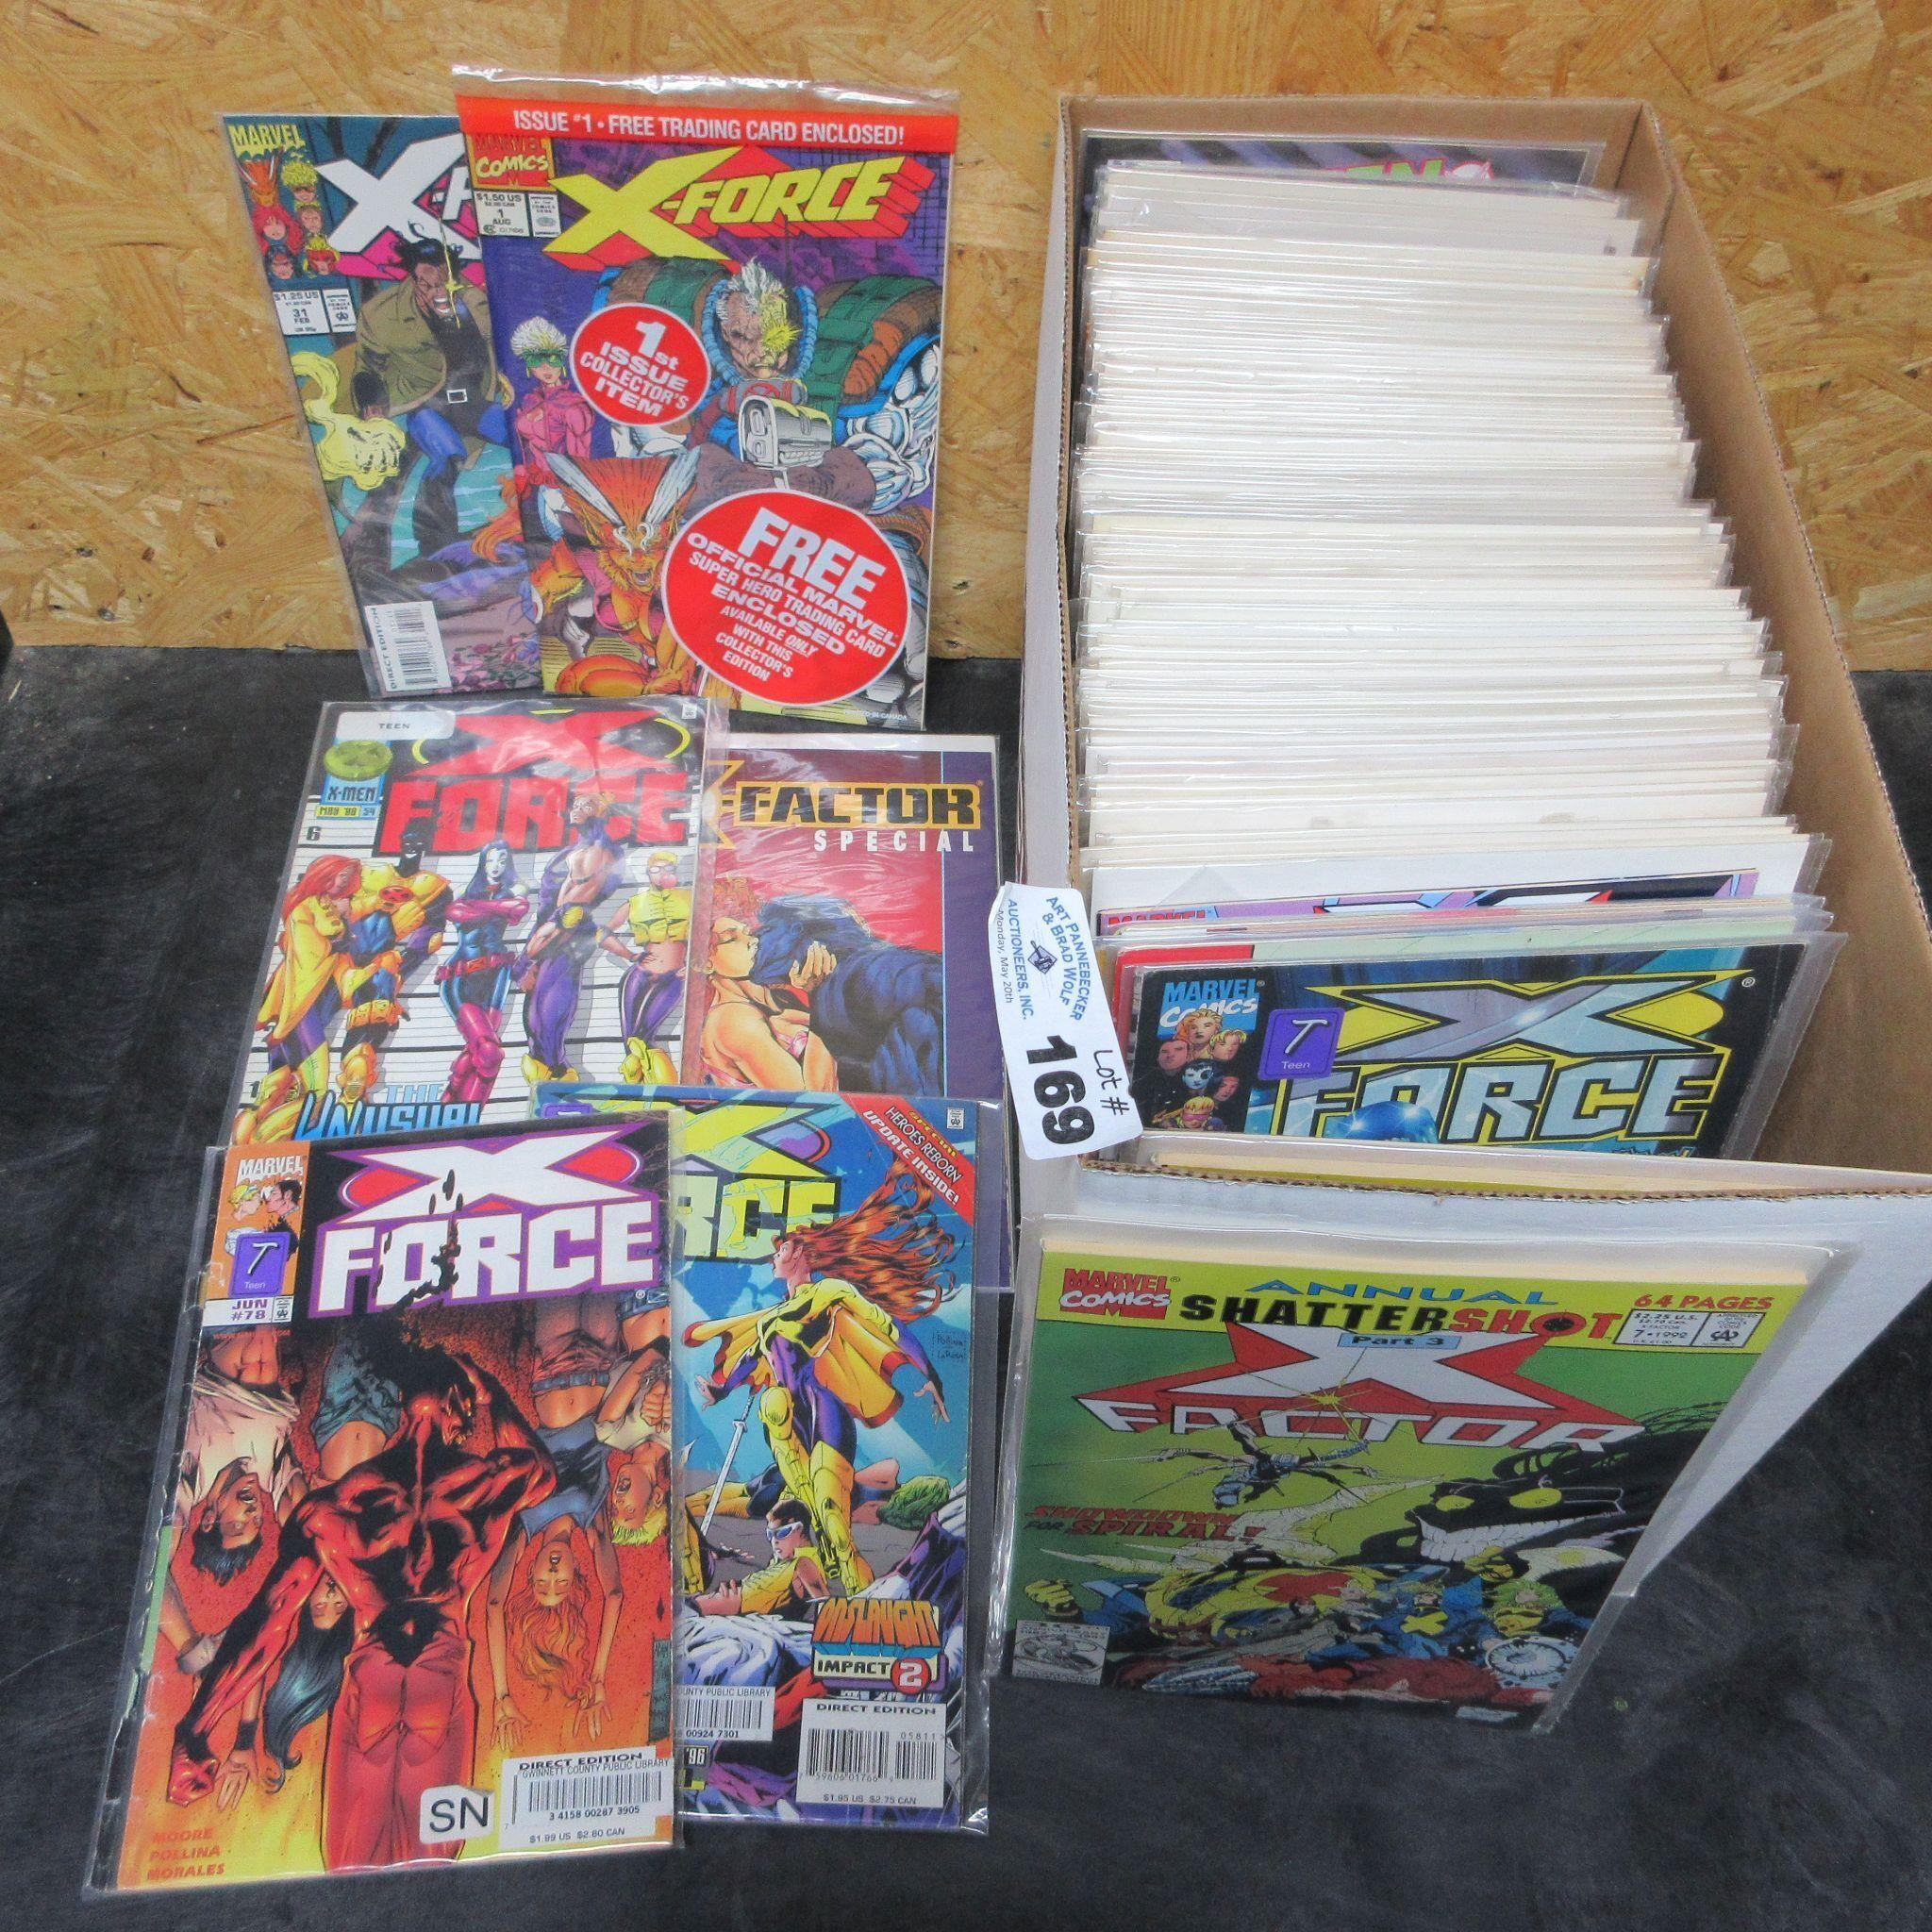 Box of Assorted Comic Books